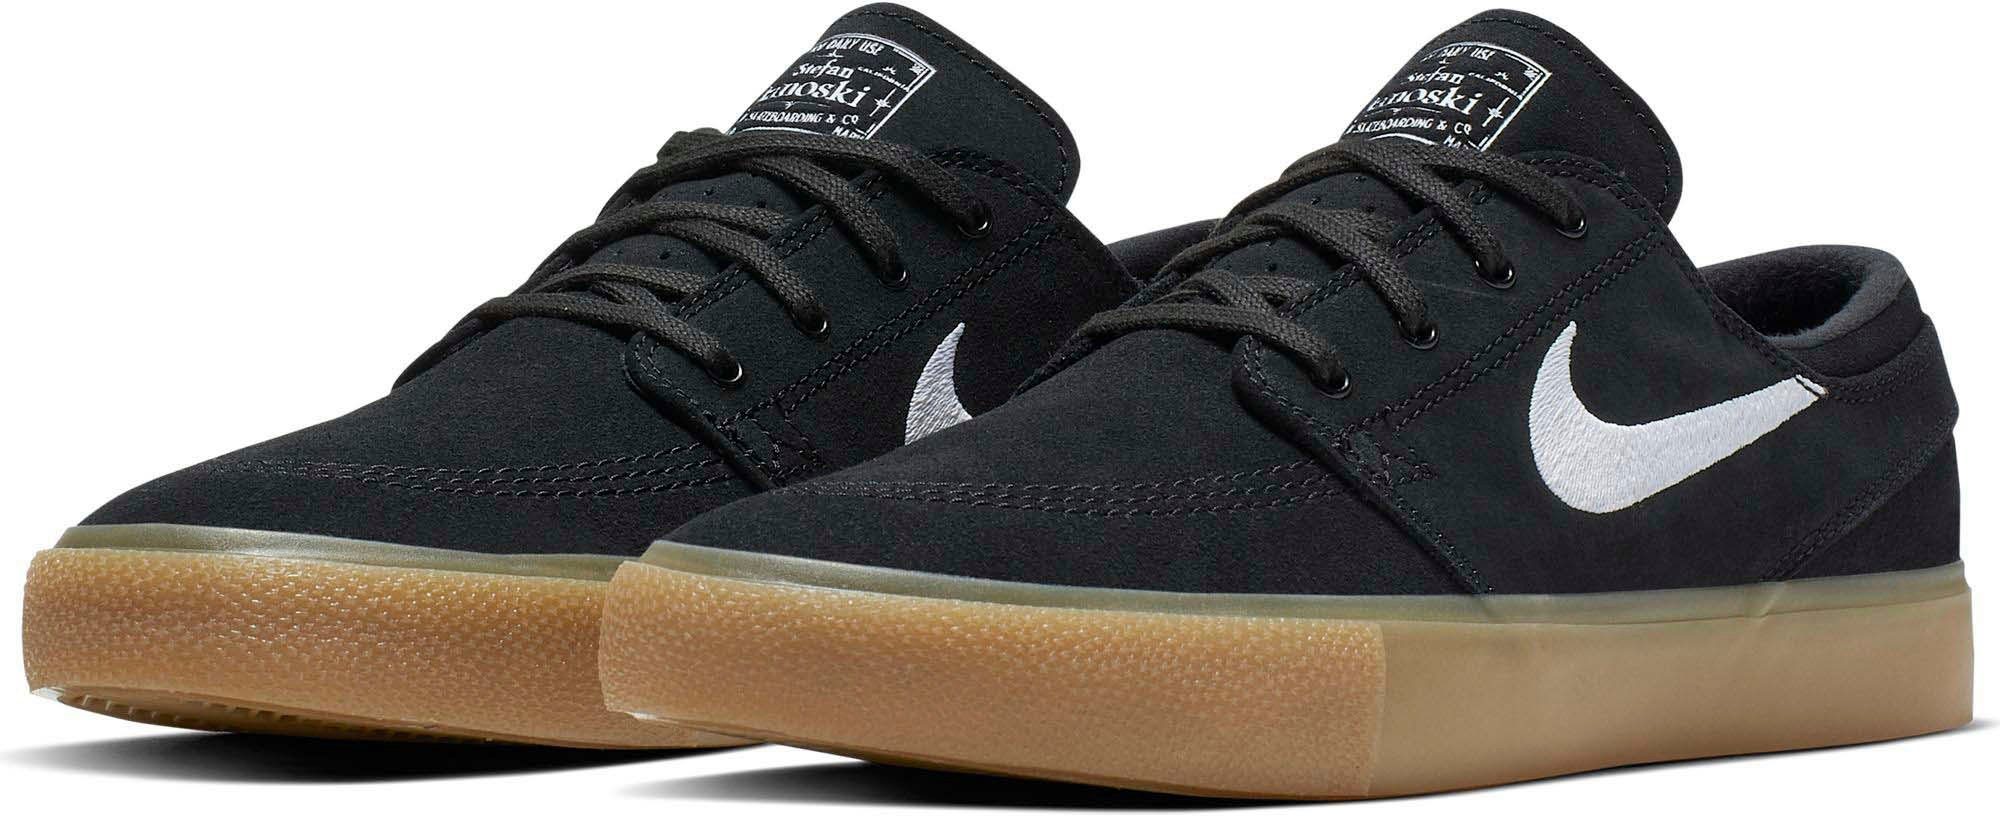 Nike SB »SB ZOOM STEFAN JANOSKI RM« Sneaker kaufen | OTTO